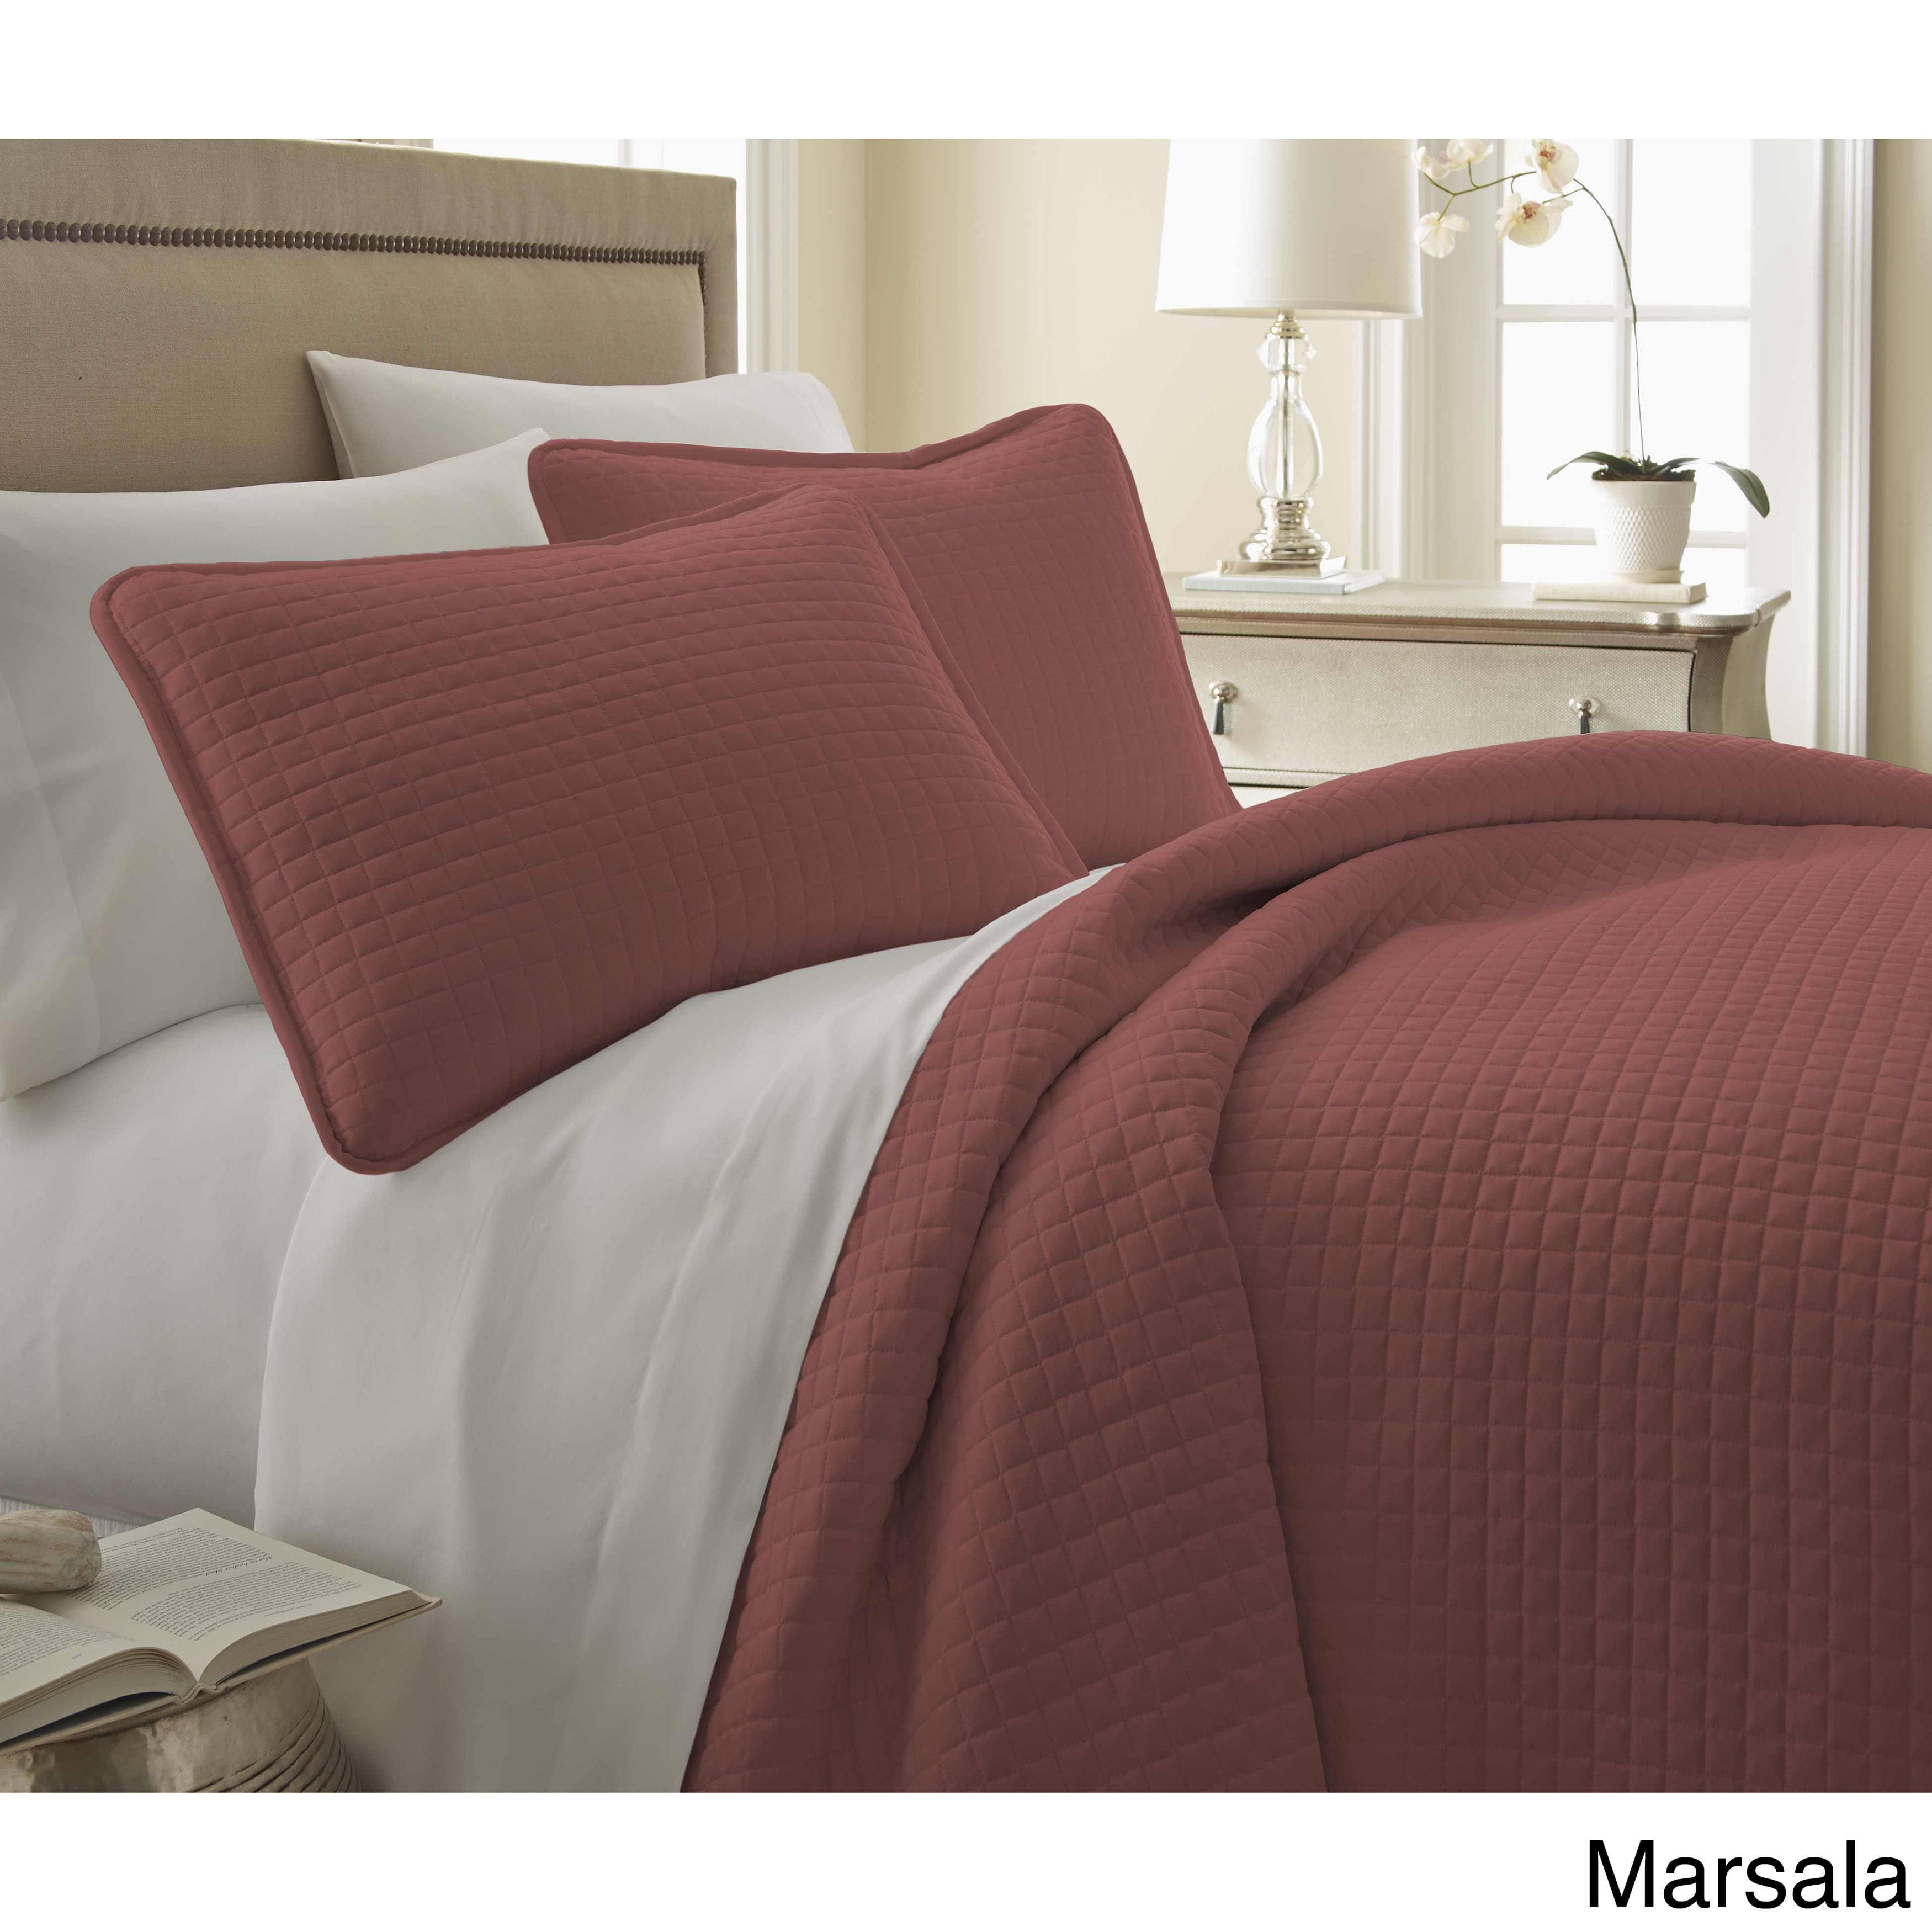 Details about   Chiara Rose 2 Piece Reversible Quilt Set Coverlet Lightweight Comforter Twin. 